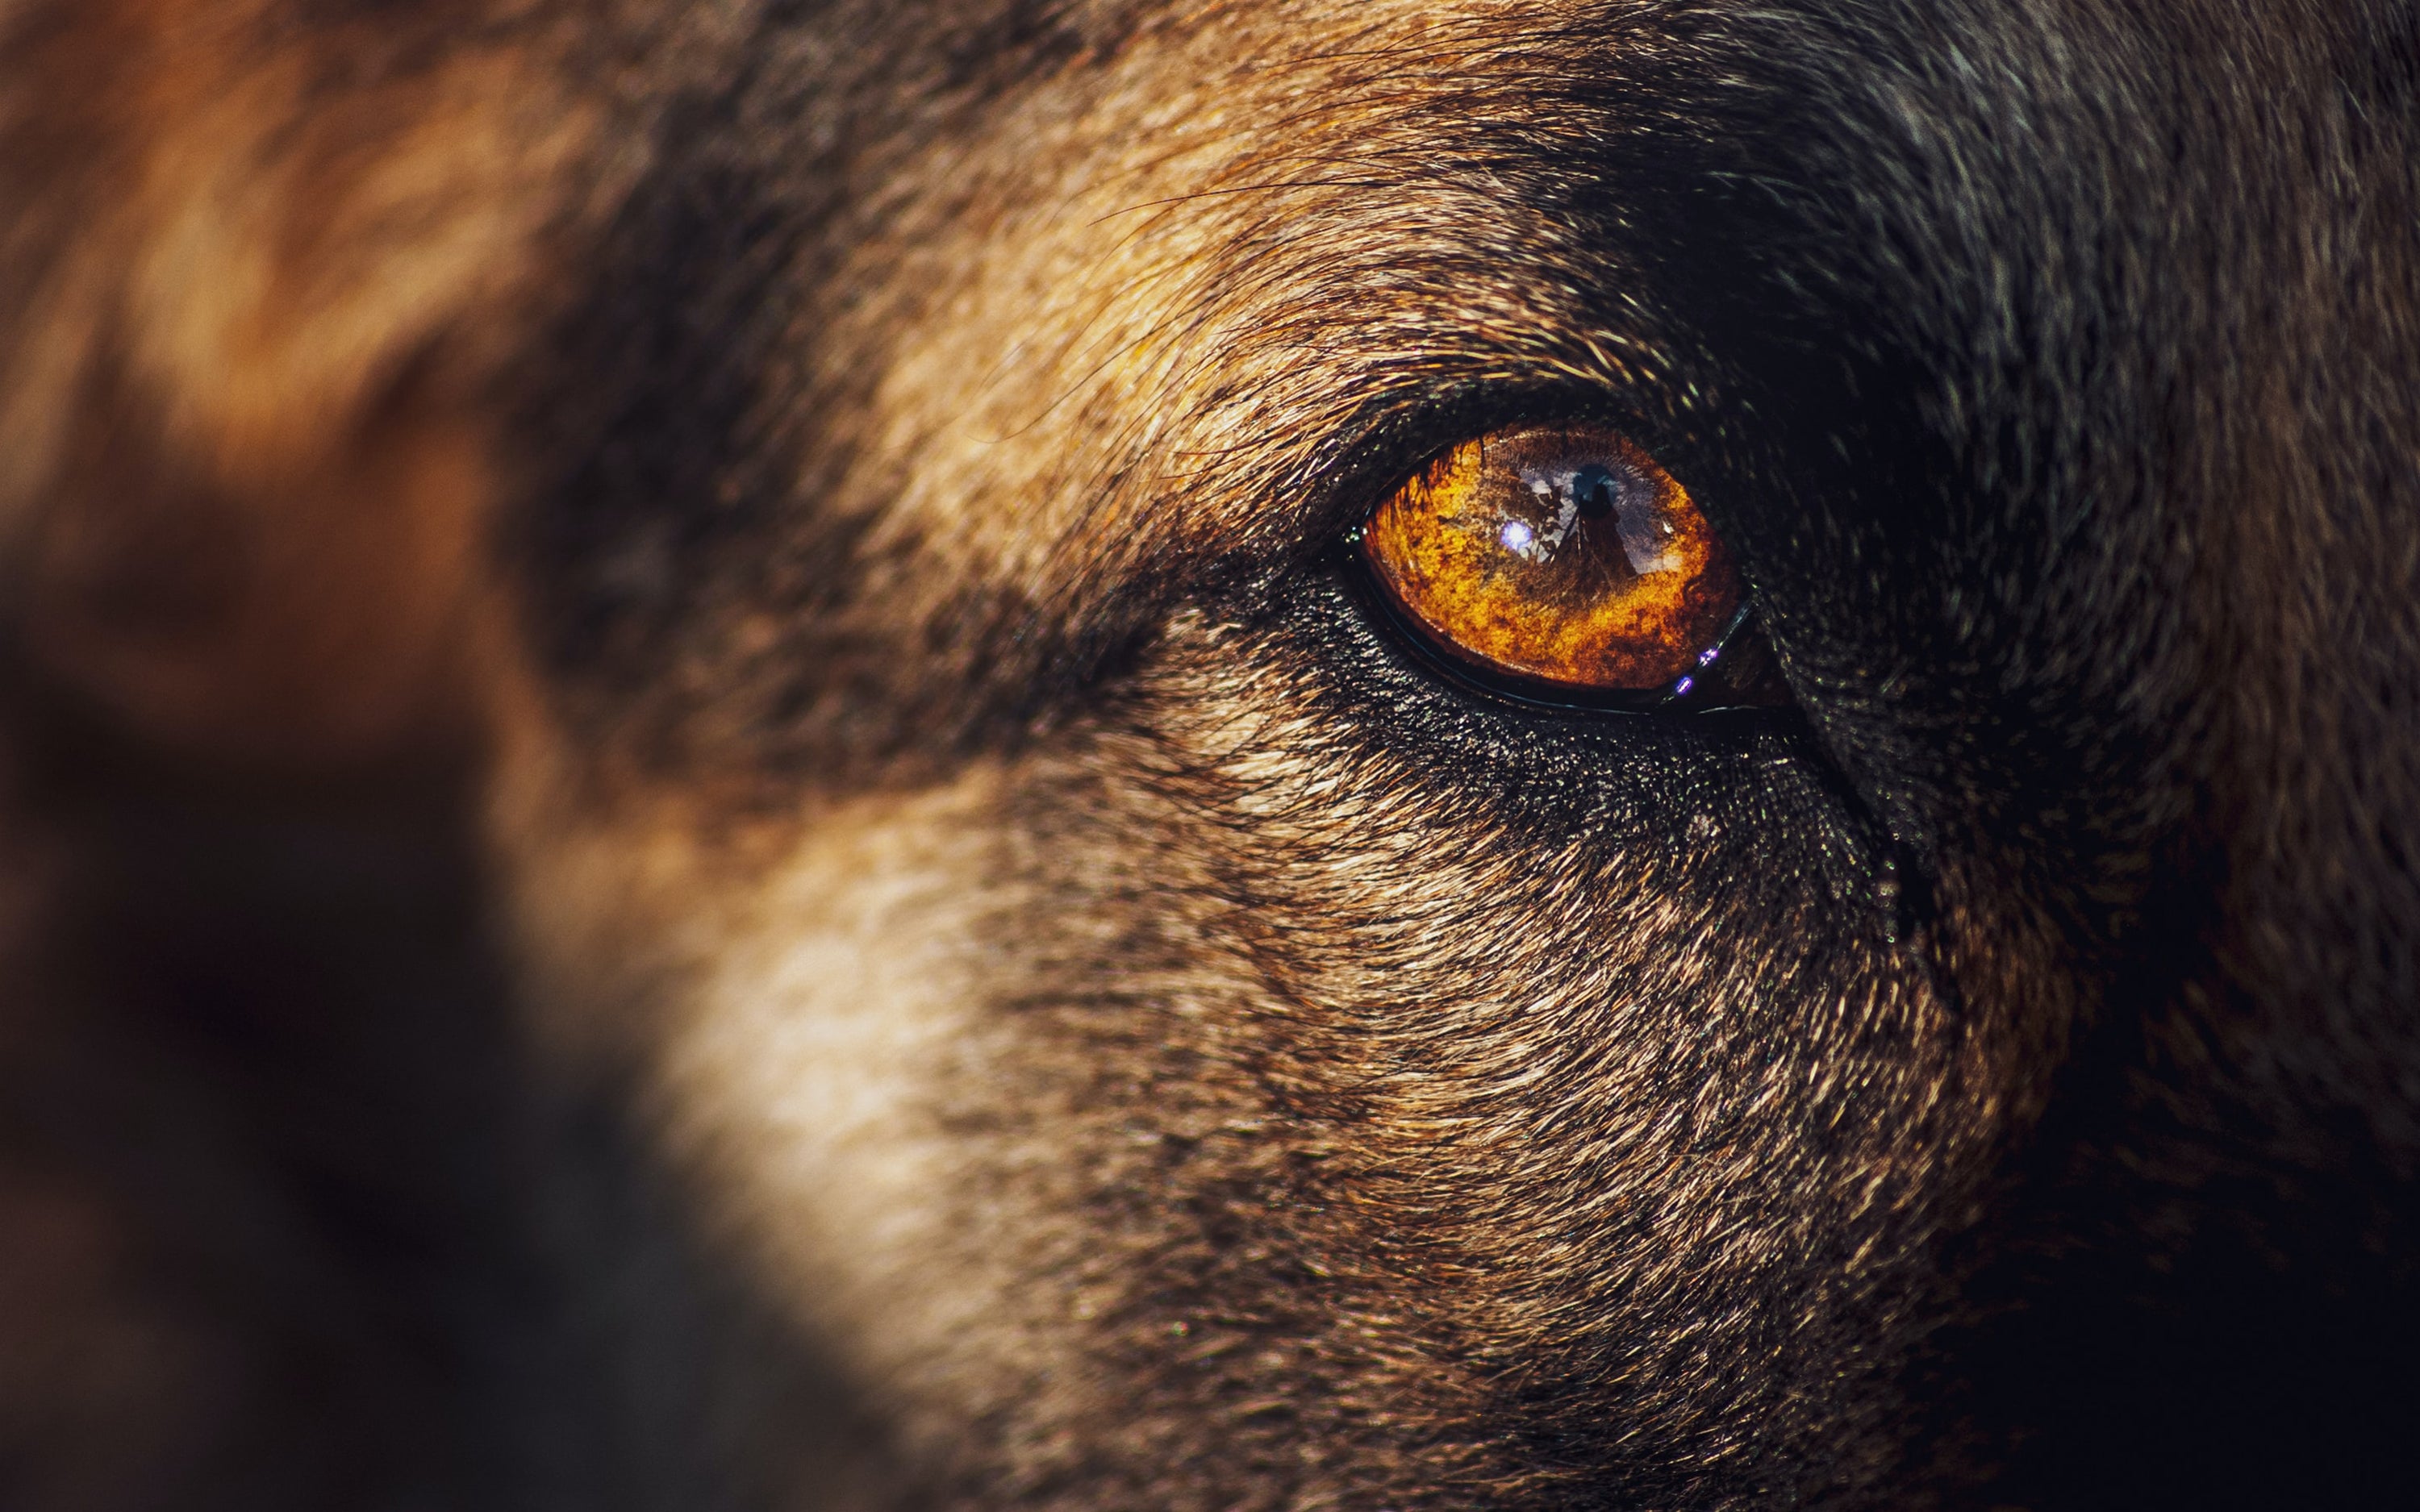 Closeup image of dog's eye.